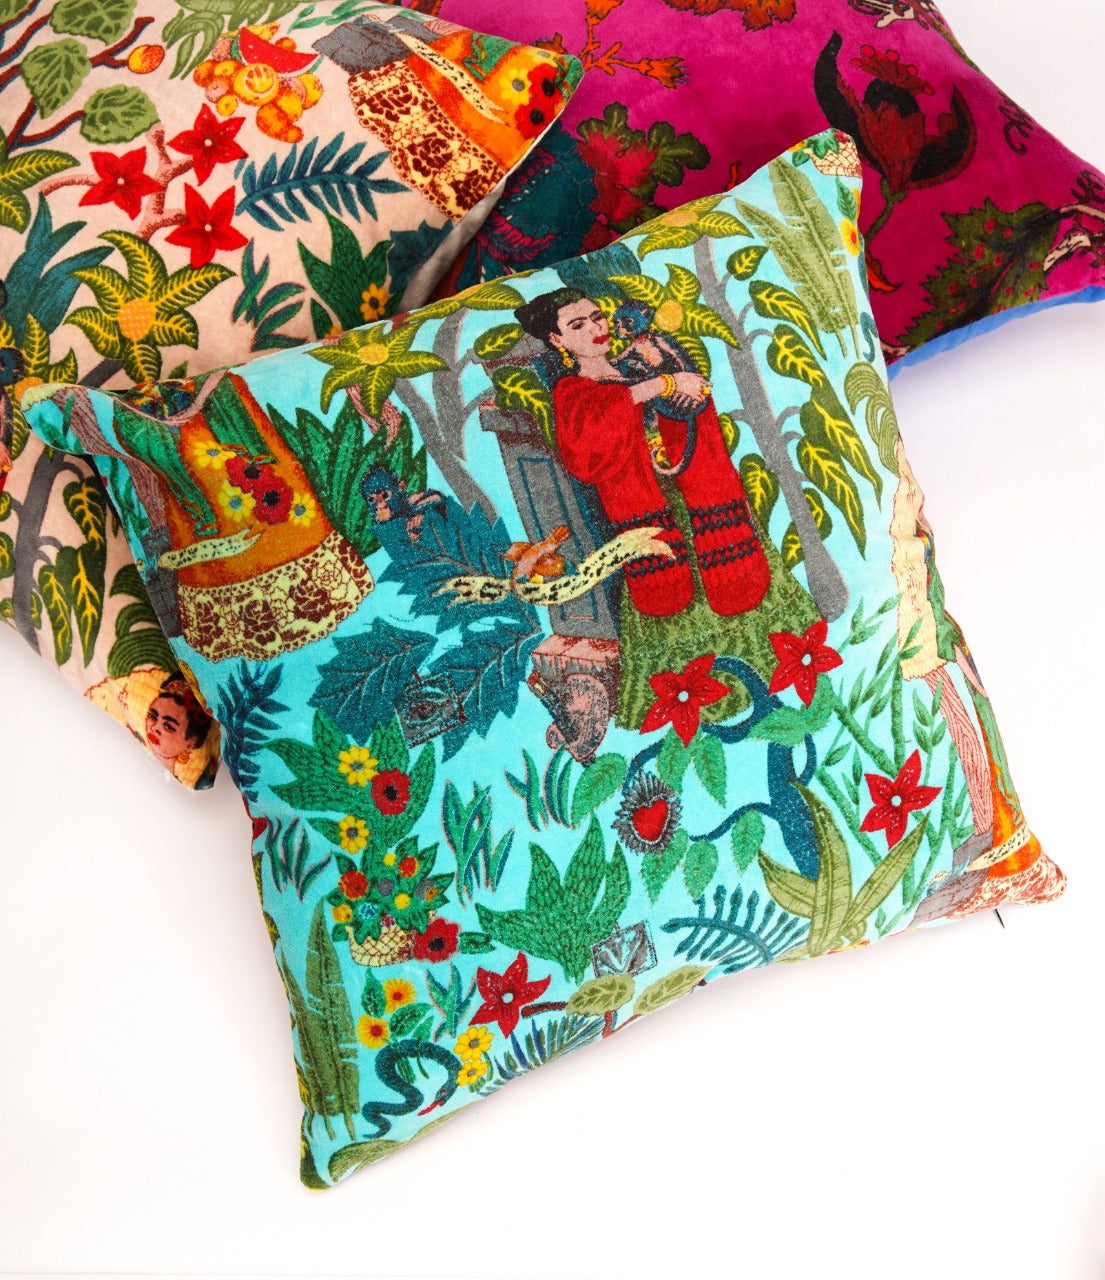 Frida Kahlo Velvet Cushion Cover-Turquoise - The Teal Thread